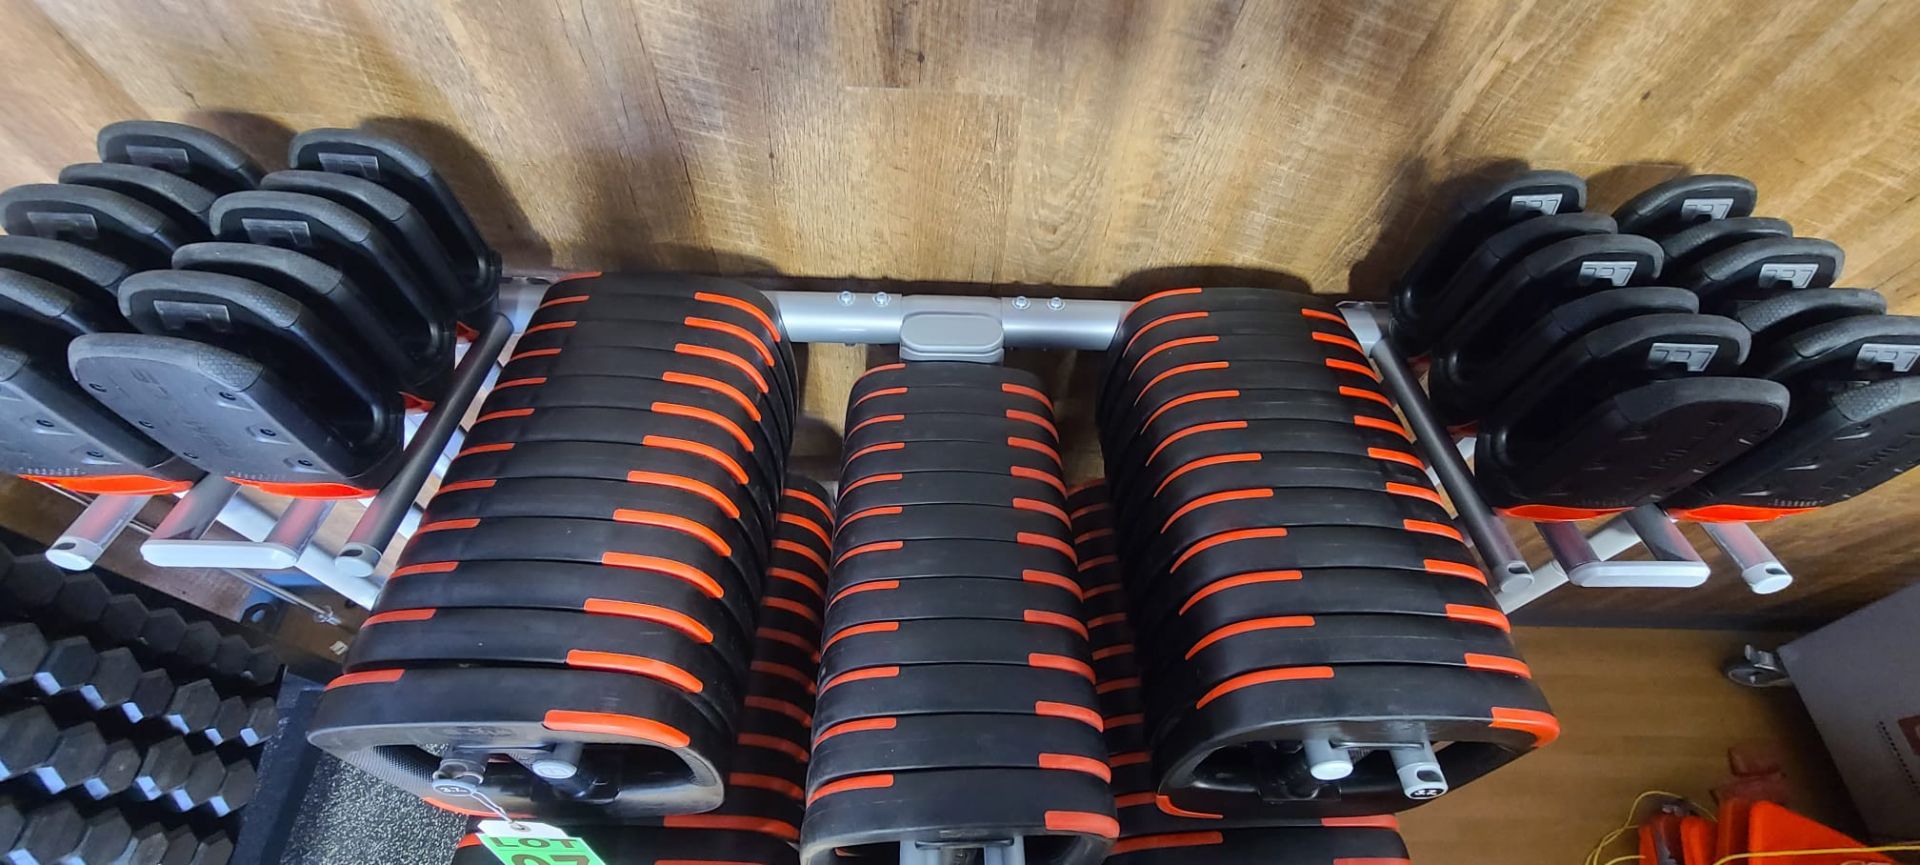 24-Set LES MILLS SmartBar Rack with 24 Sets of SmartBar Bars & Weights - Image 7 of 11